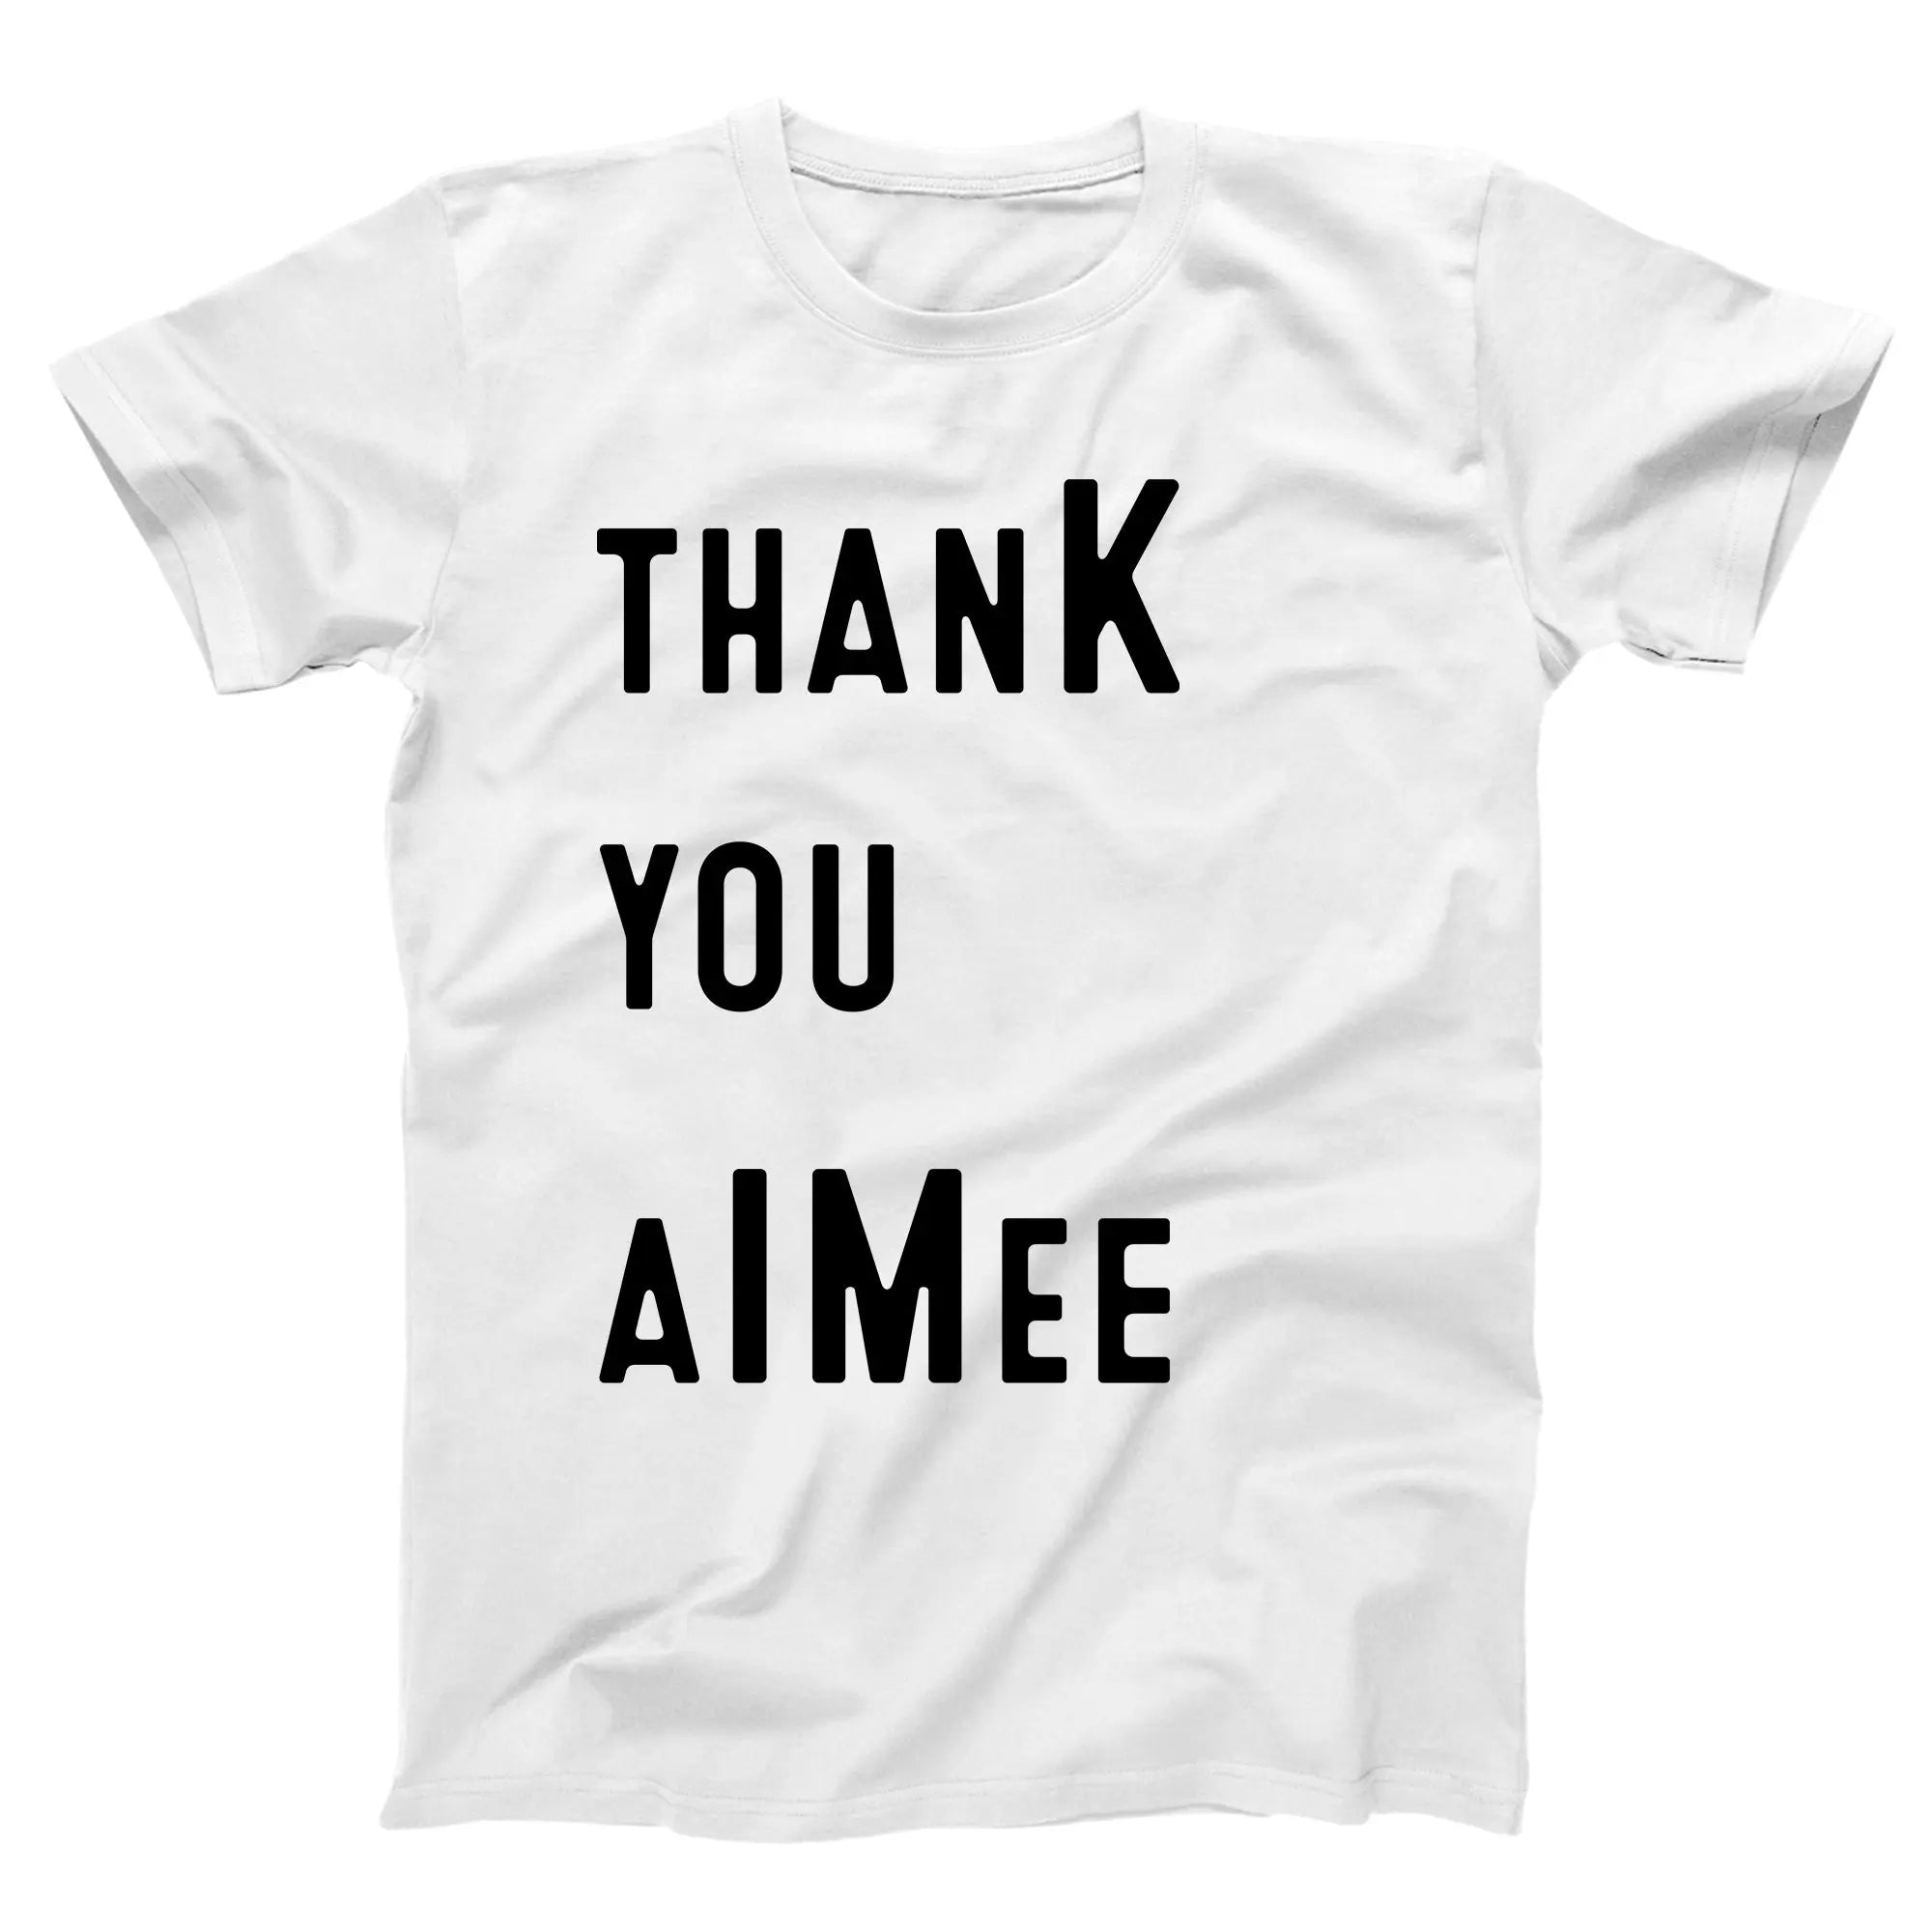 thanK you aIMee Tshirt - Donkey Tees